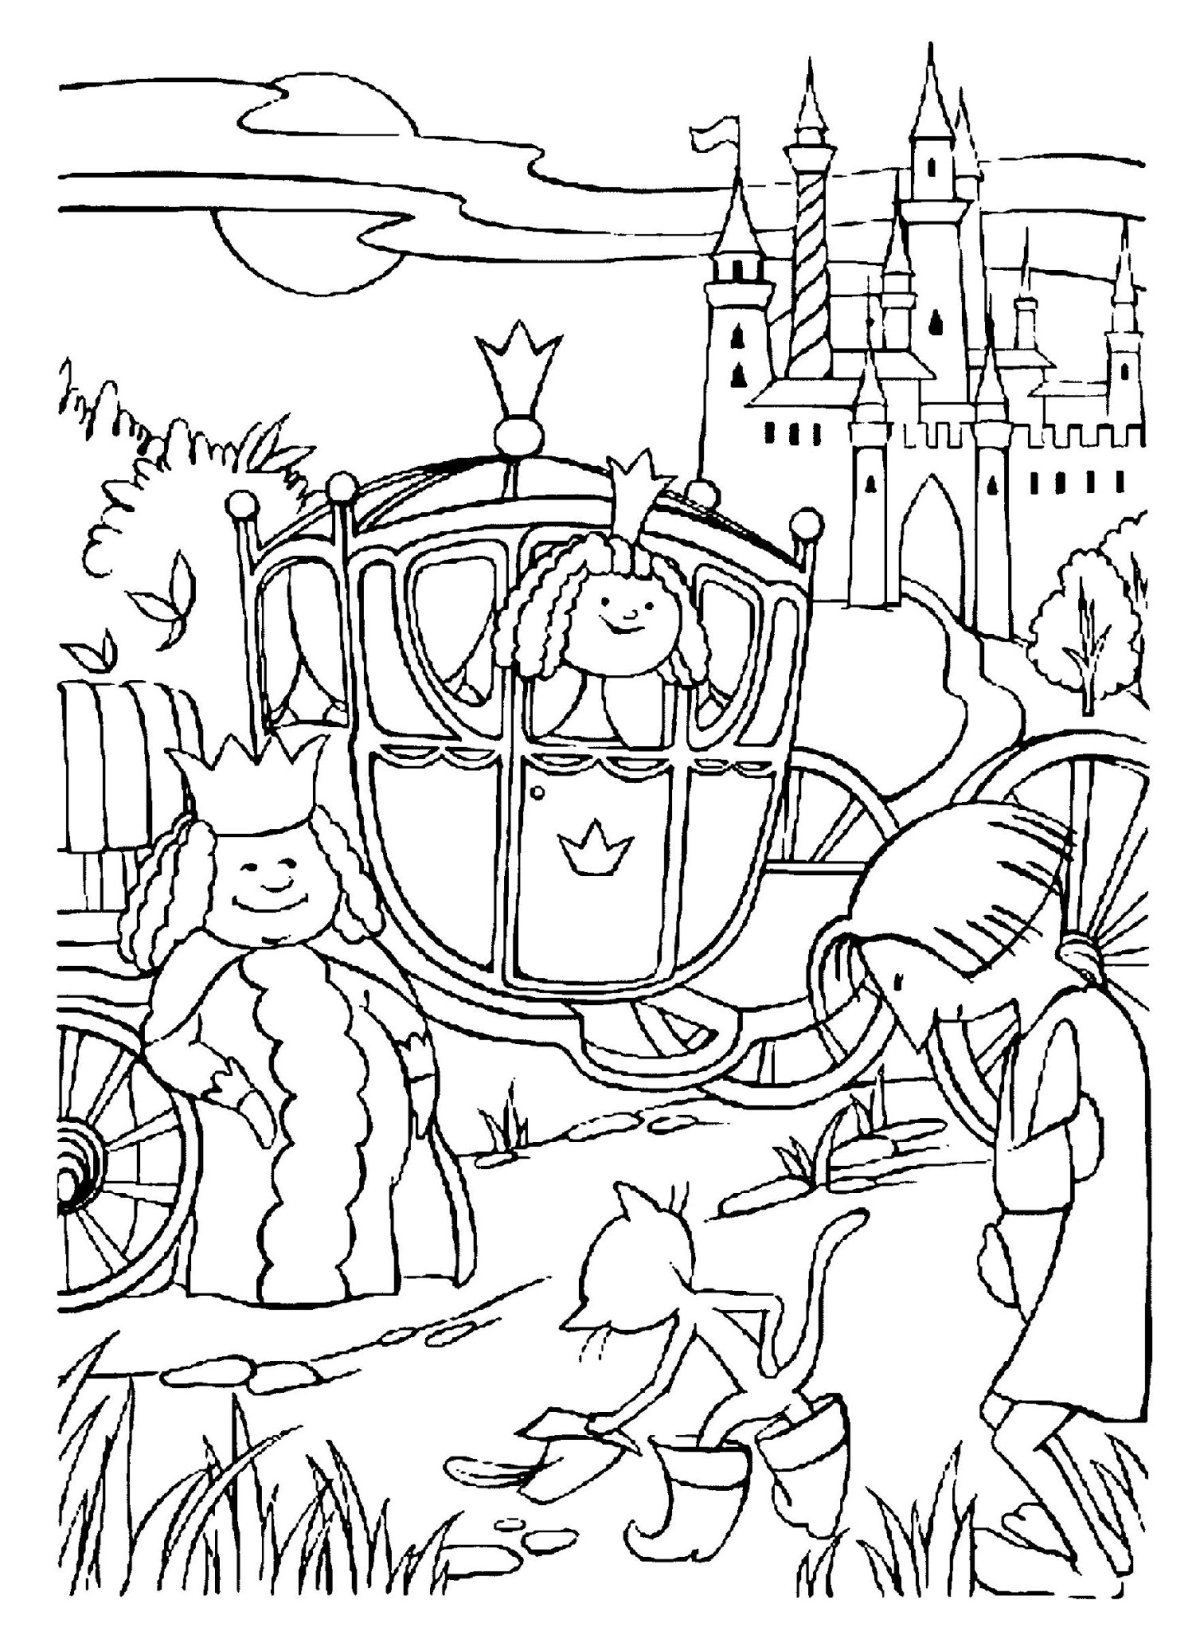 Иллюстрация к маркиз де карабас